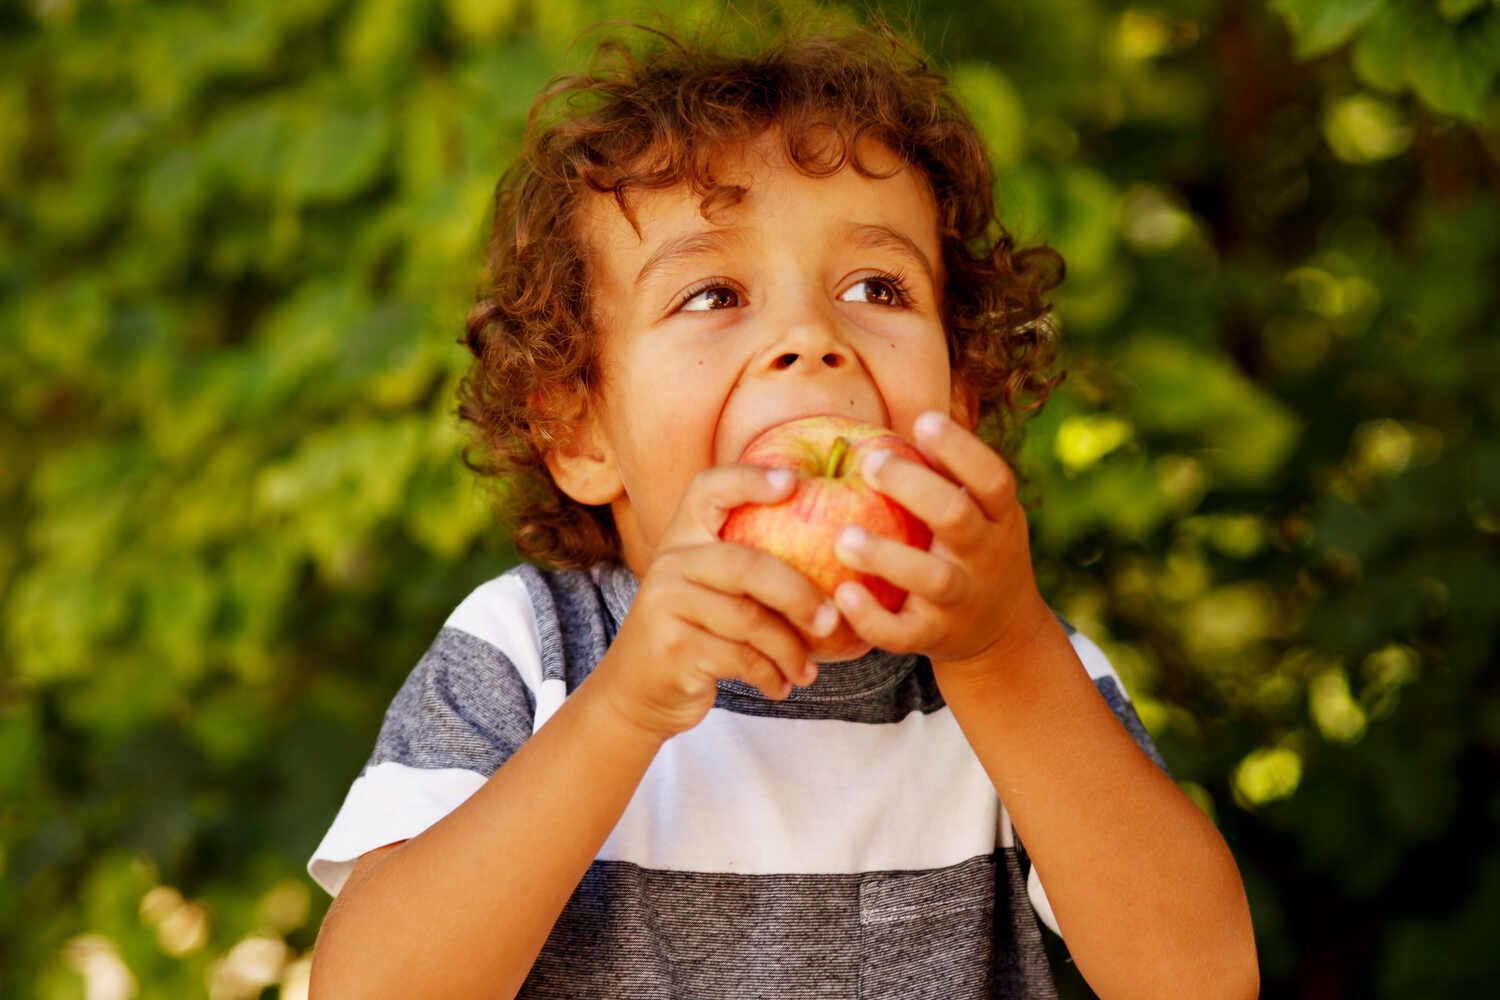 A boy eating apple